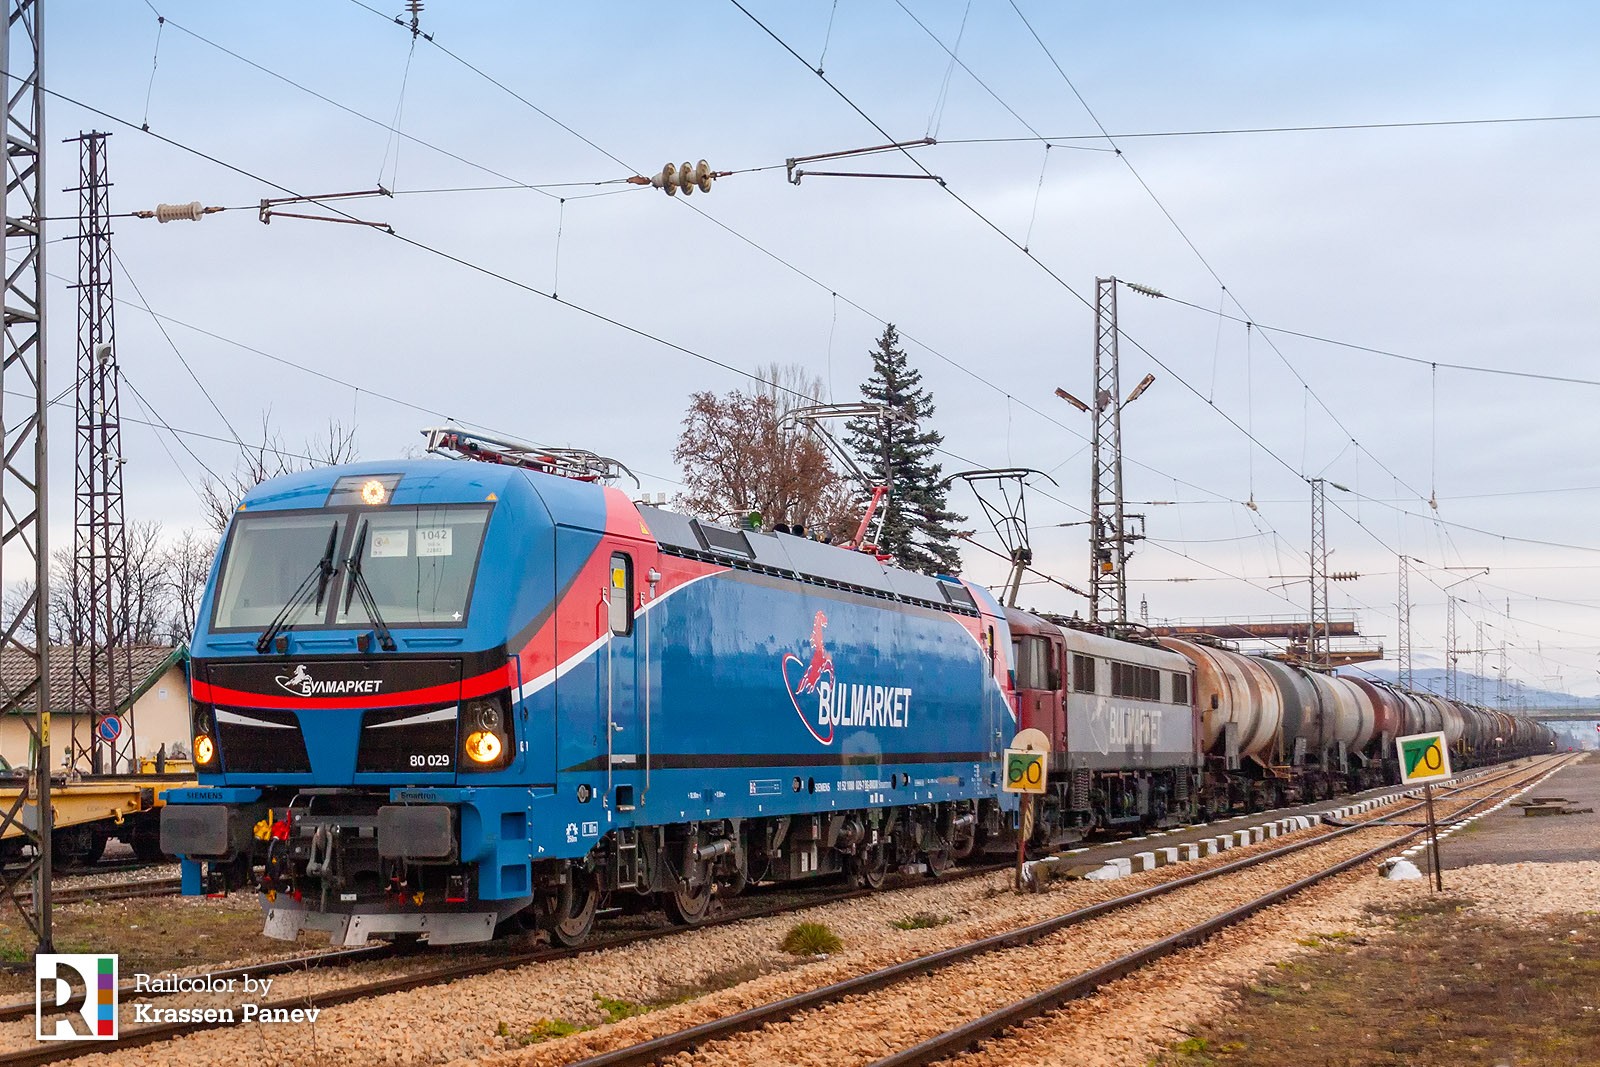 Bulmarket Rail Cargo модернизира своя парк с персонализирани локомотиви и вагони